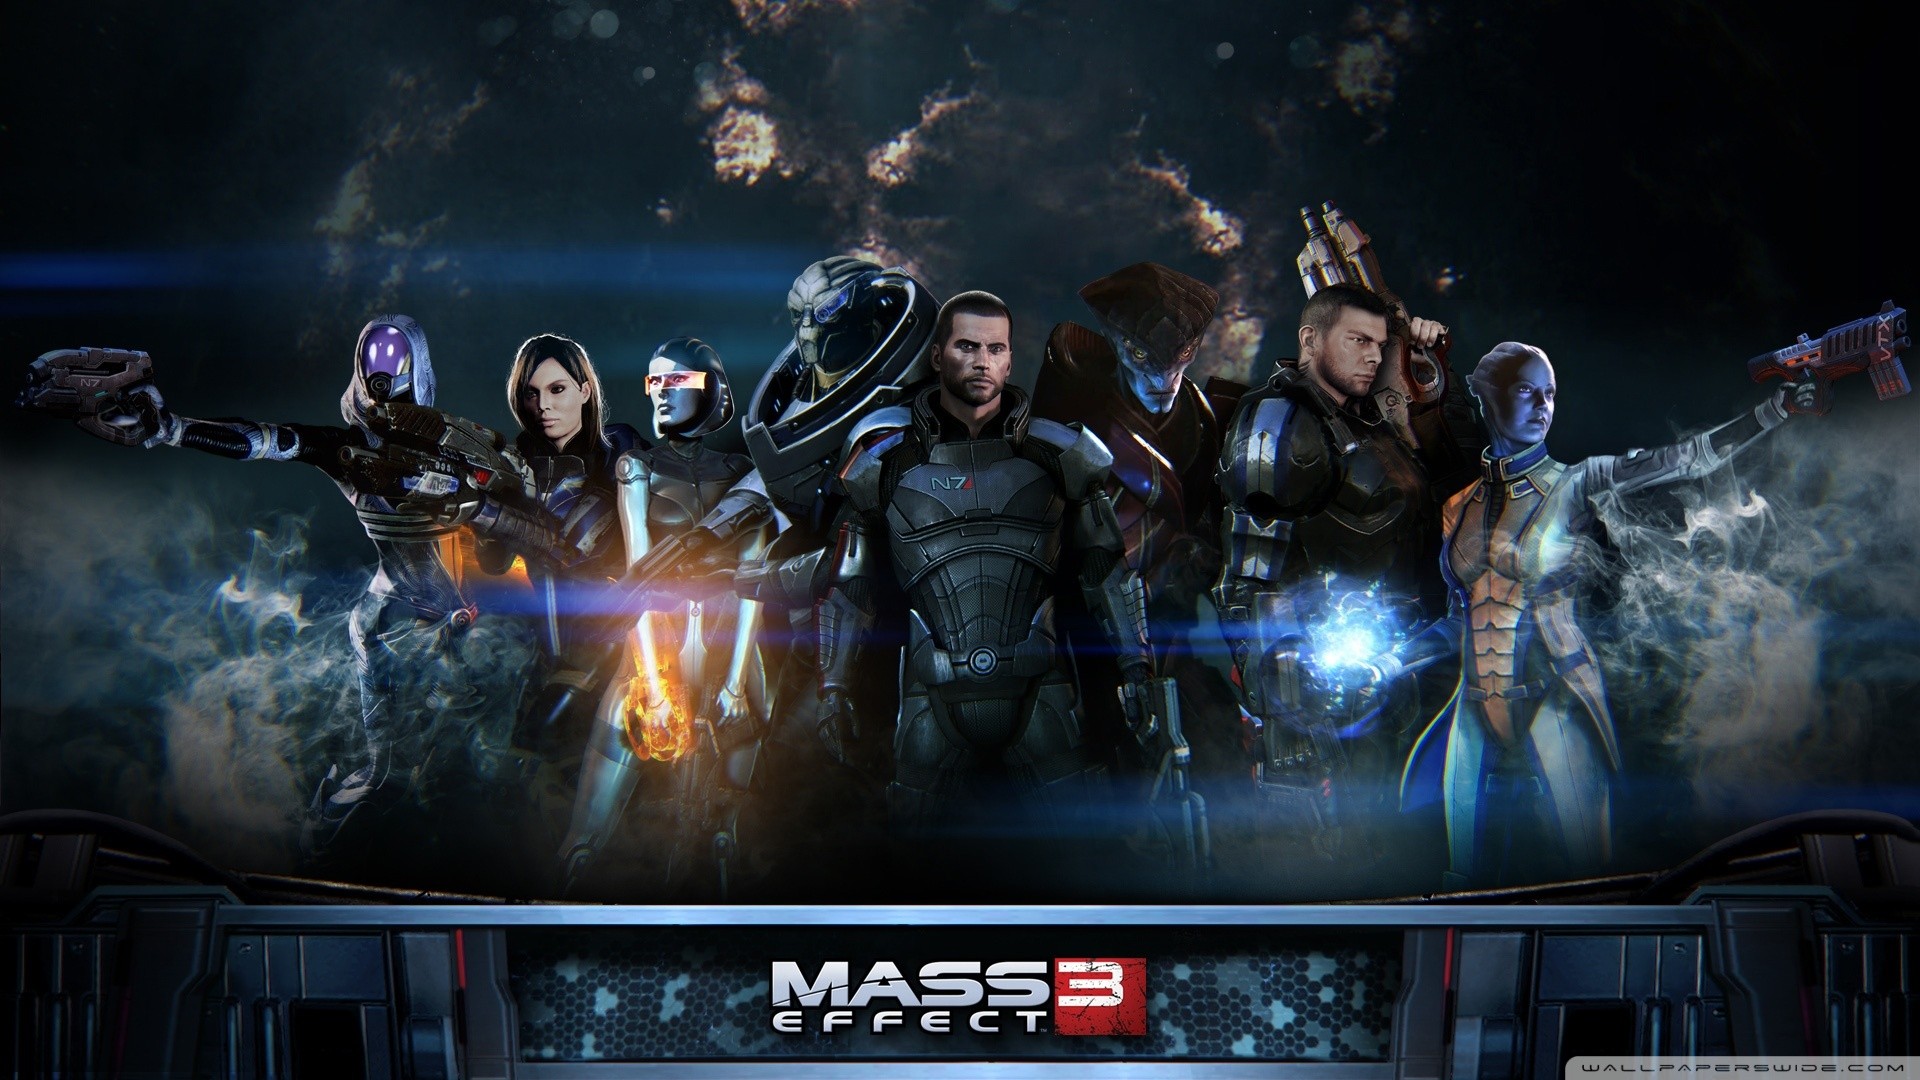 General 1920x1080 video games Mass Effect 3 PC gaming video game men video game characters video game girls science fiction science fiction women Science Fiction Men